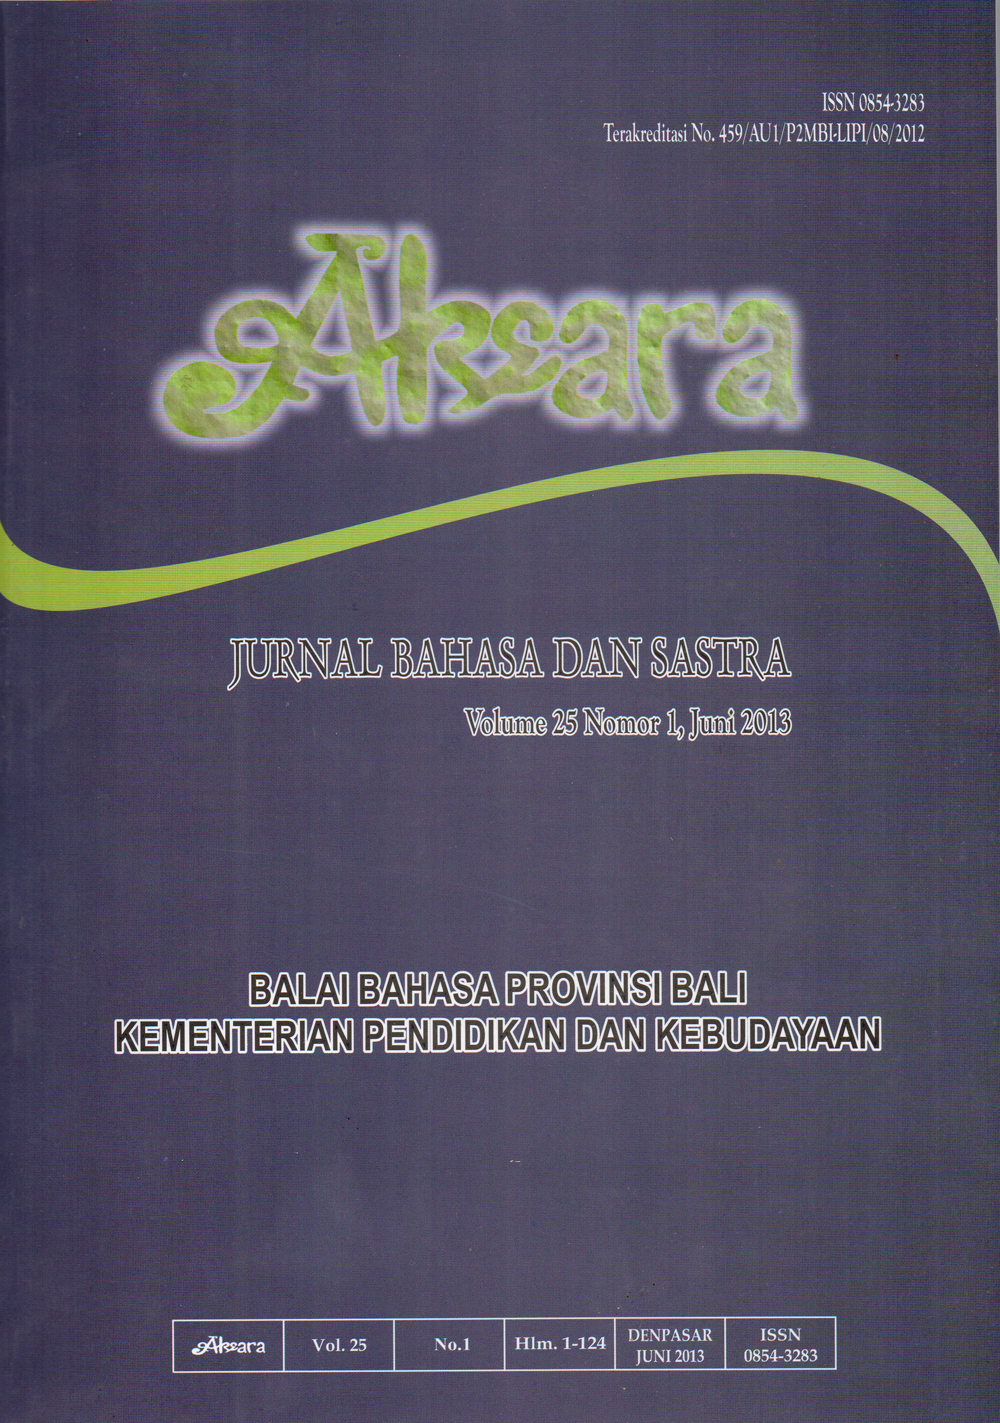 Aksara, Vol. 25 no. 1 Juni 2013